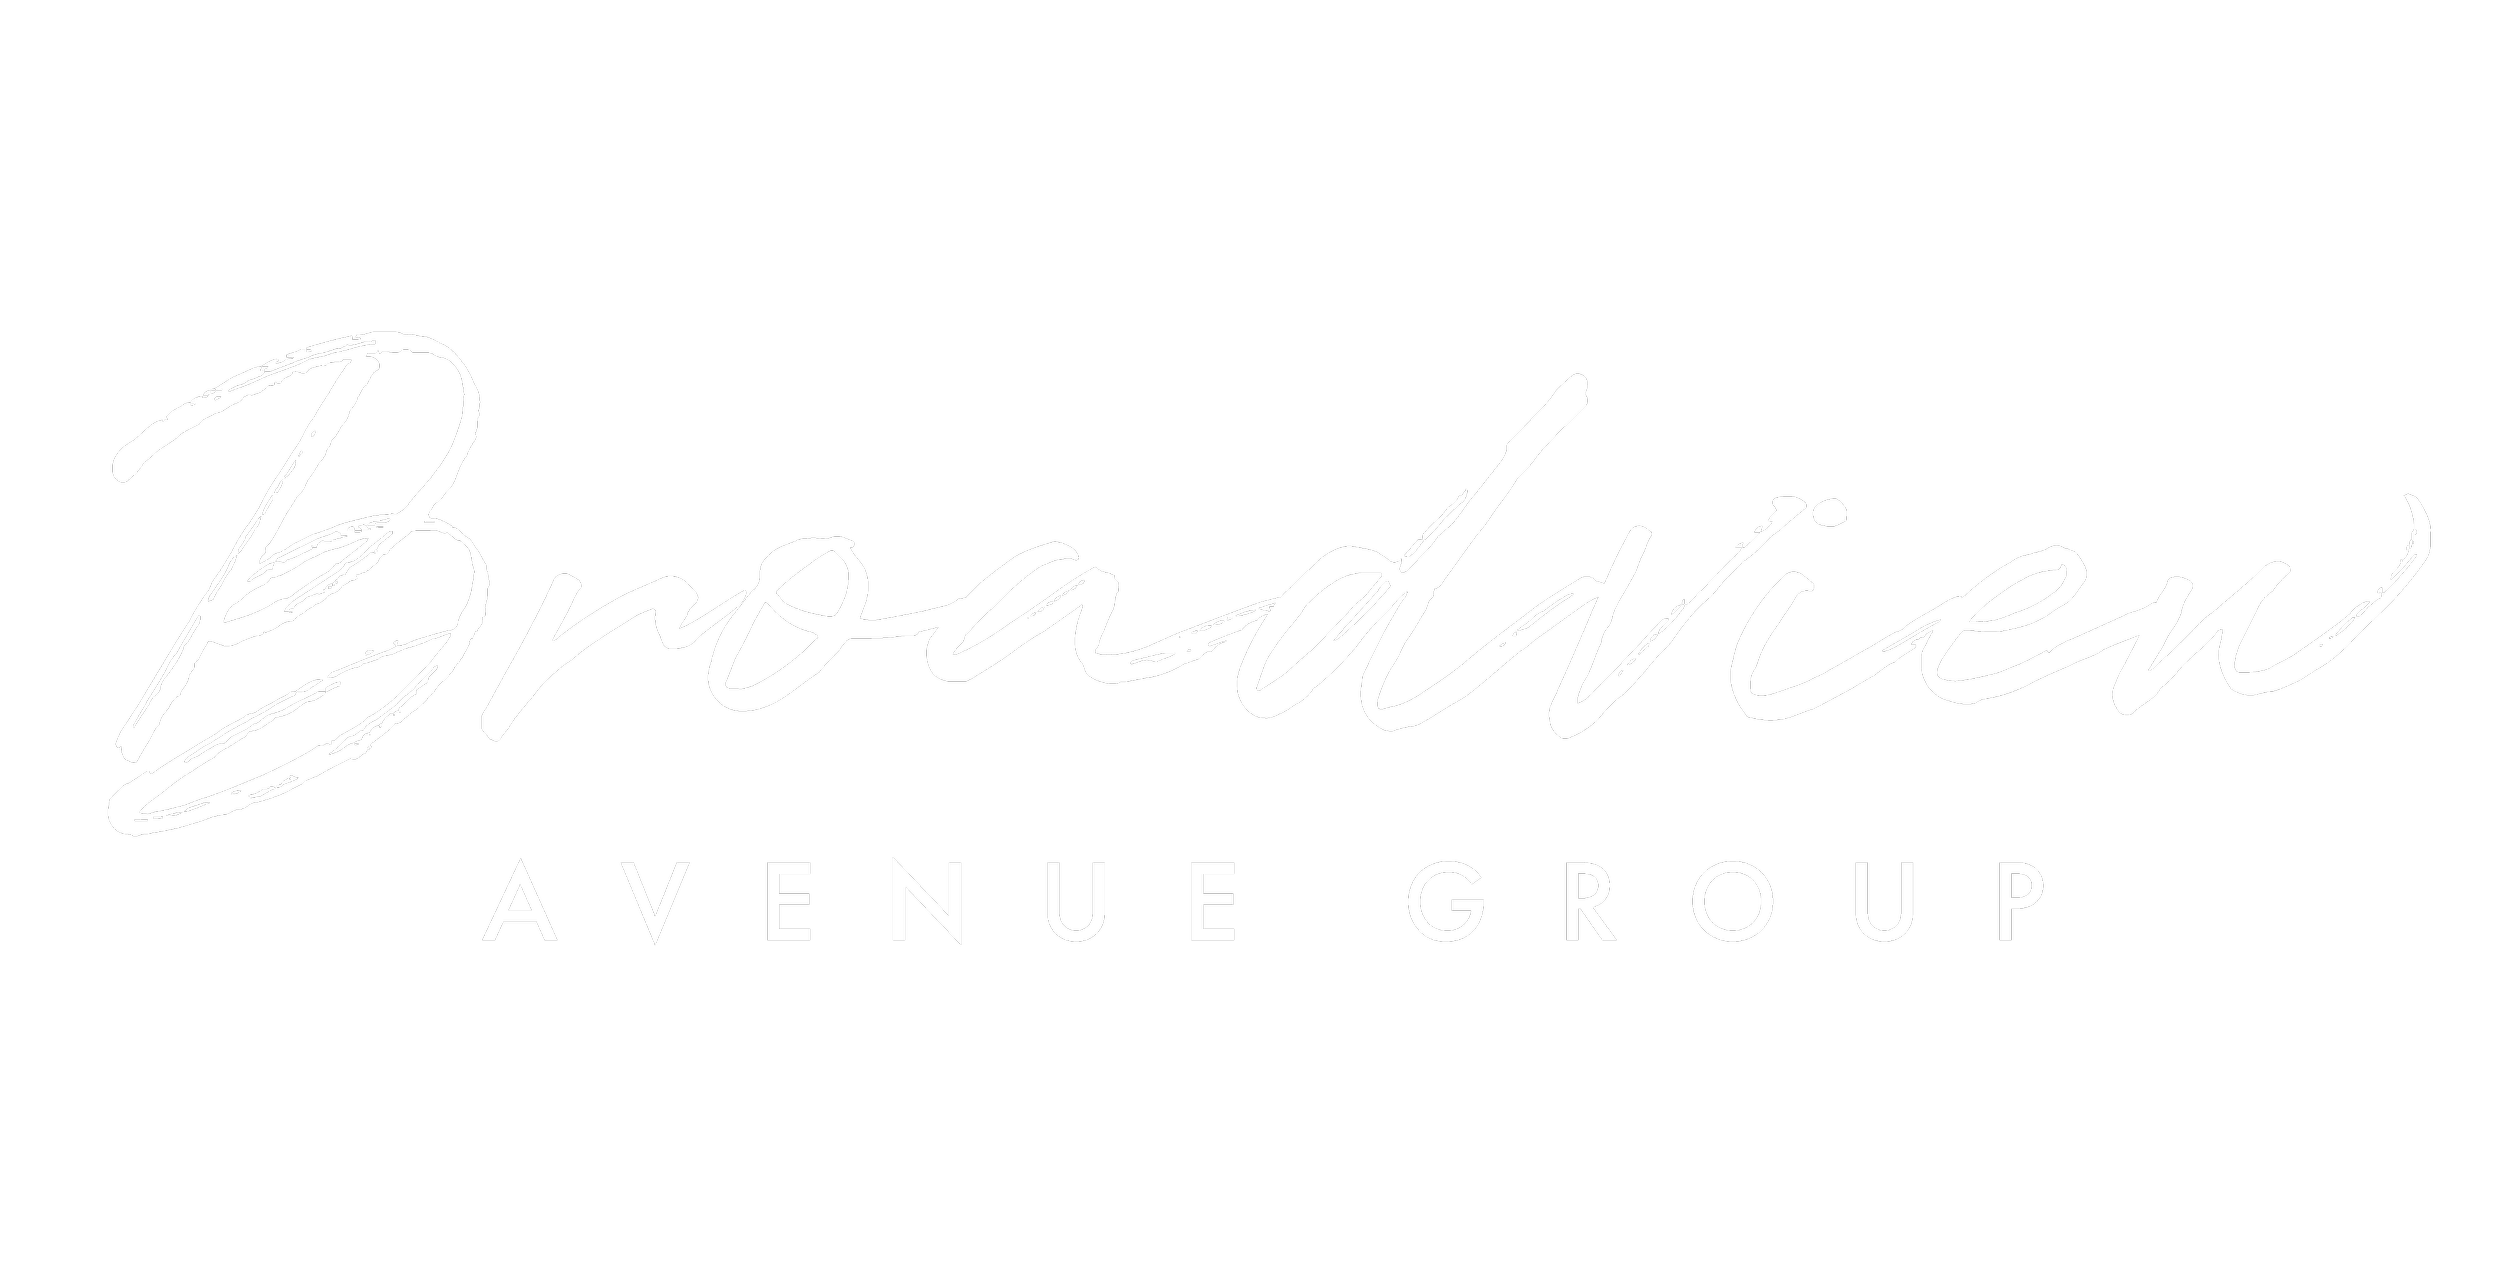 Broadview Avenue Group